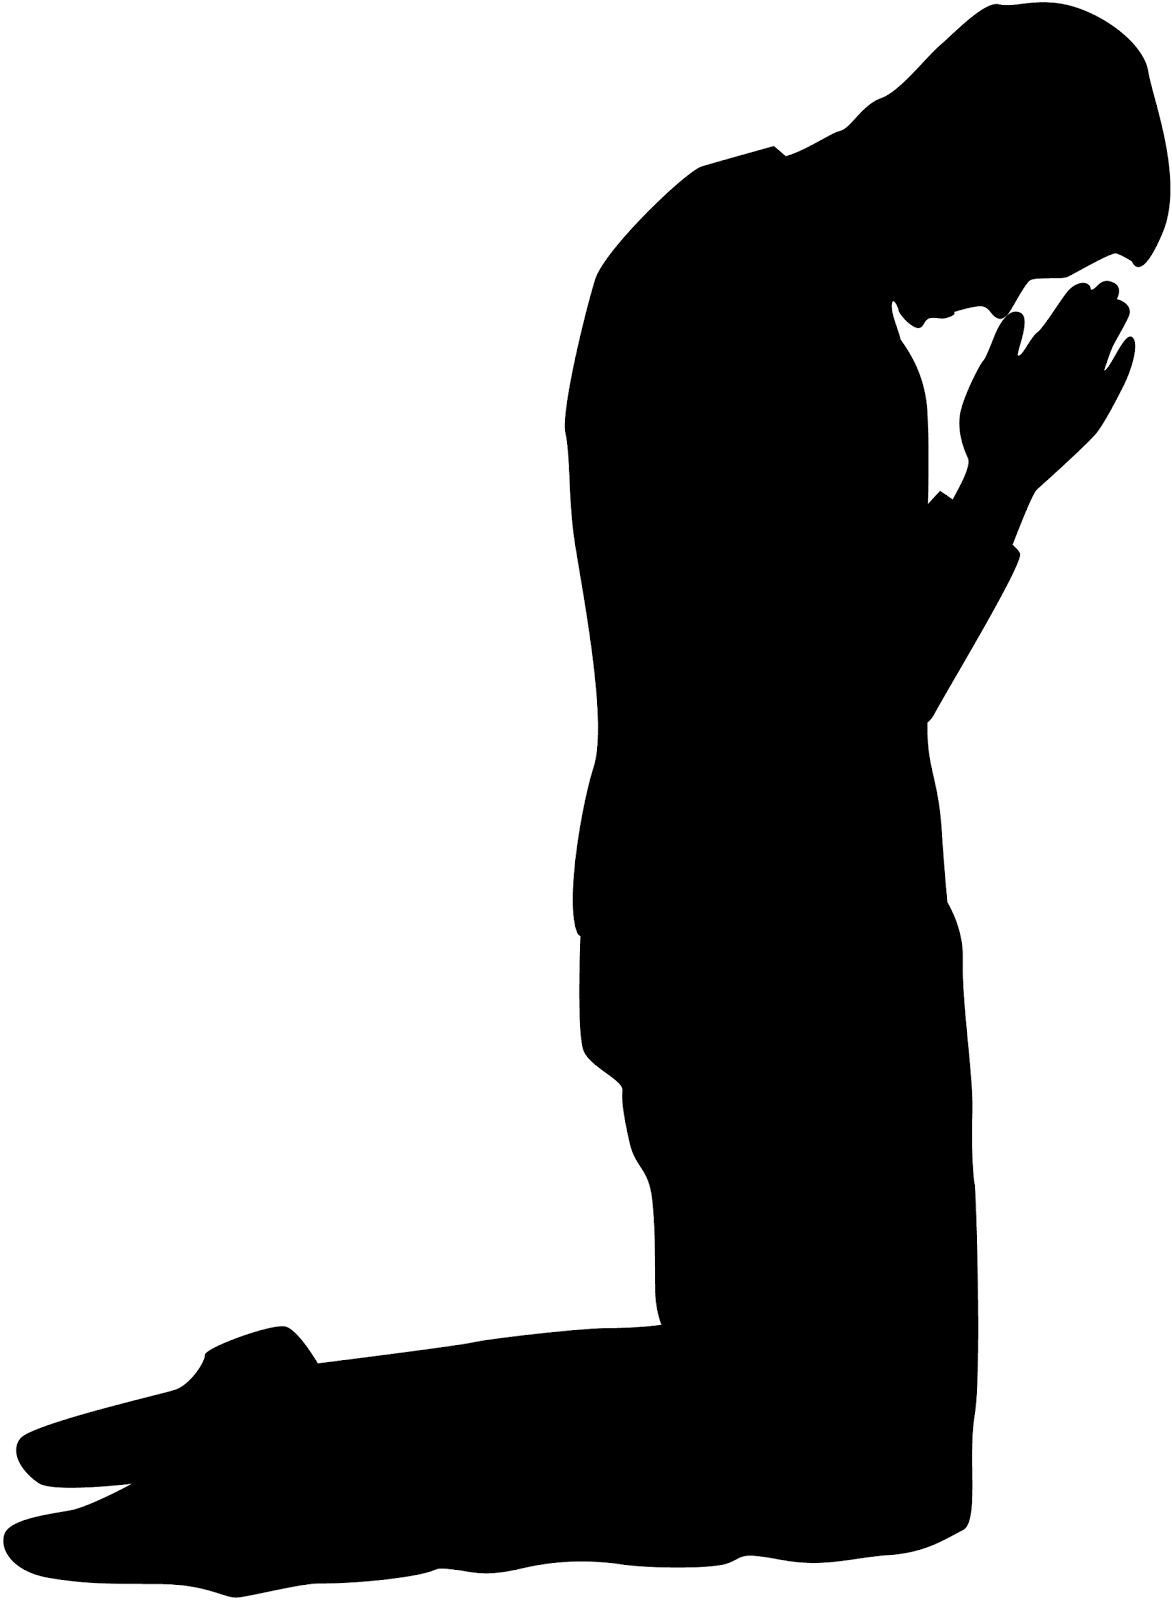 Bible man praying clipart black and white - ClipartFox